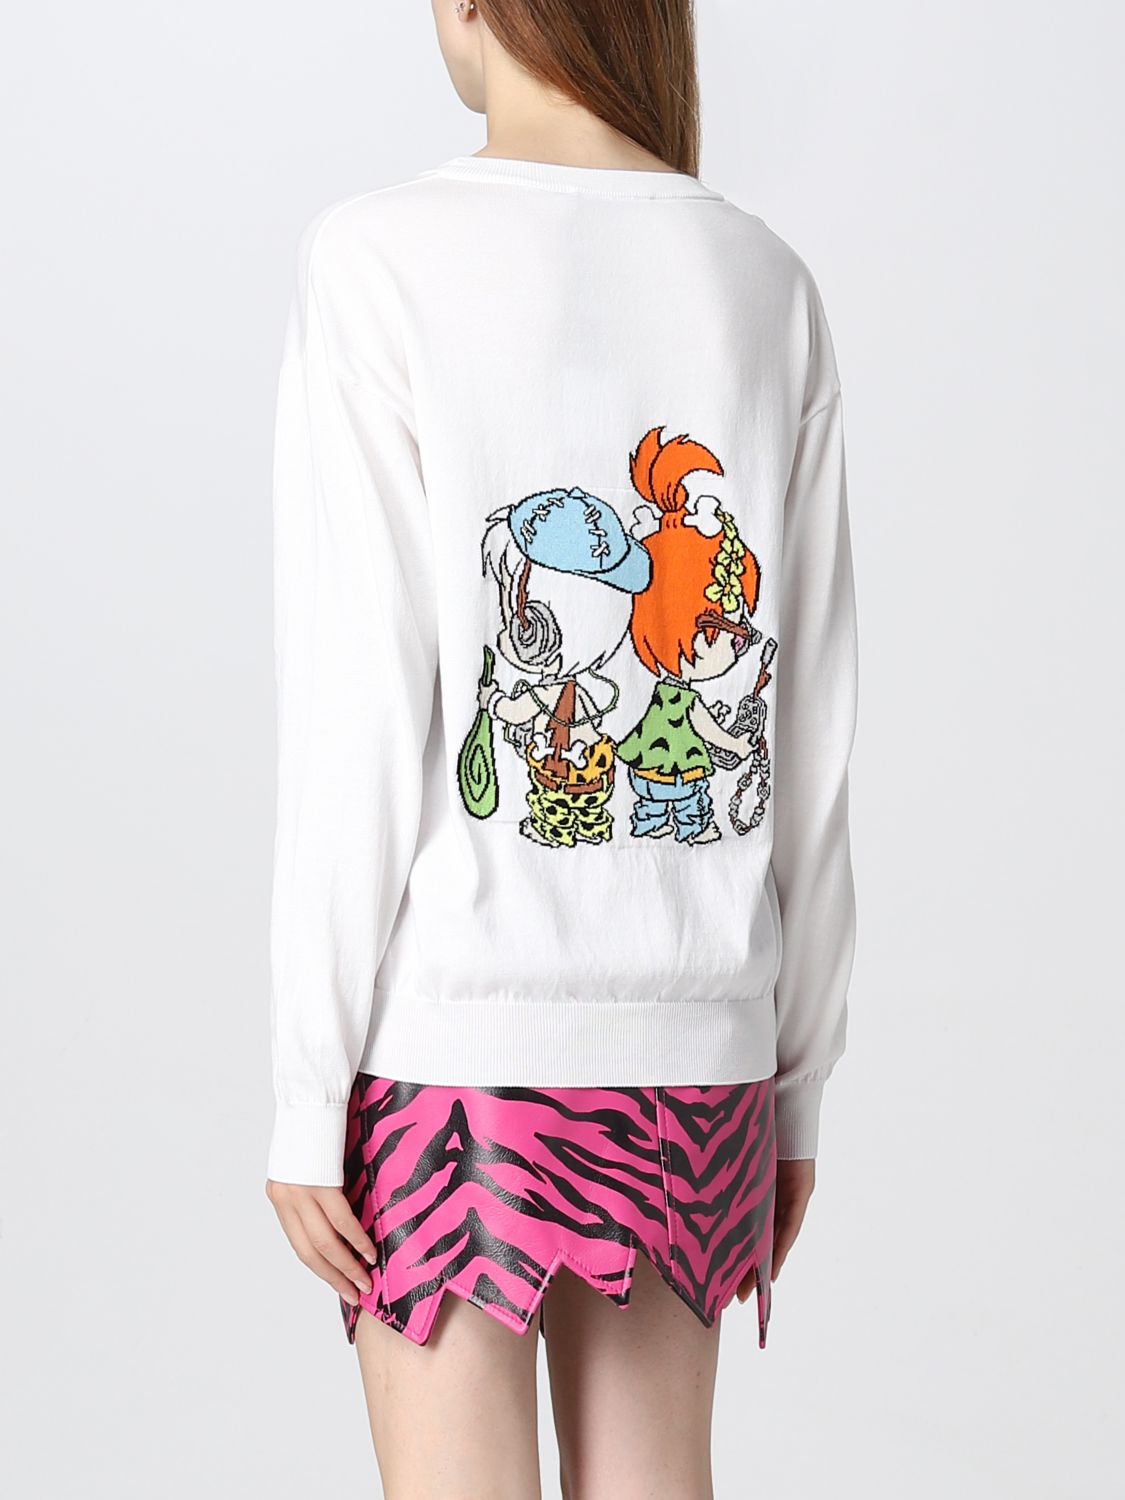 MOSCHINO COUTURE: x The Flintstones ™ sweatshirt - White 